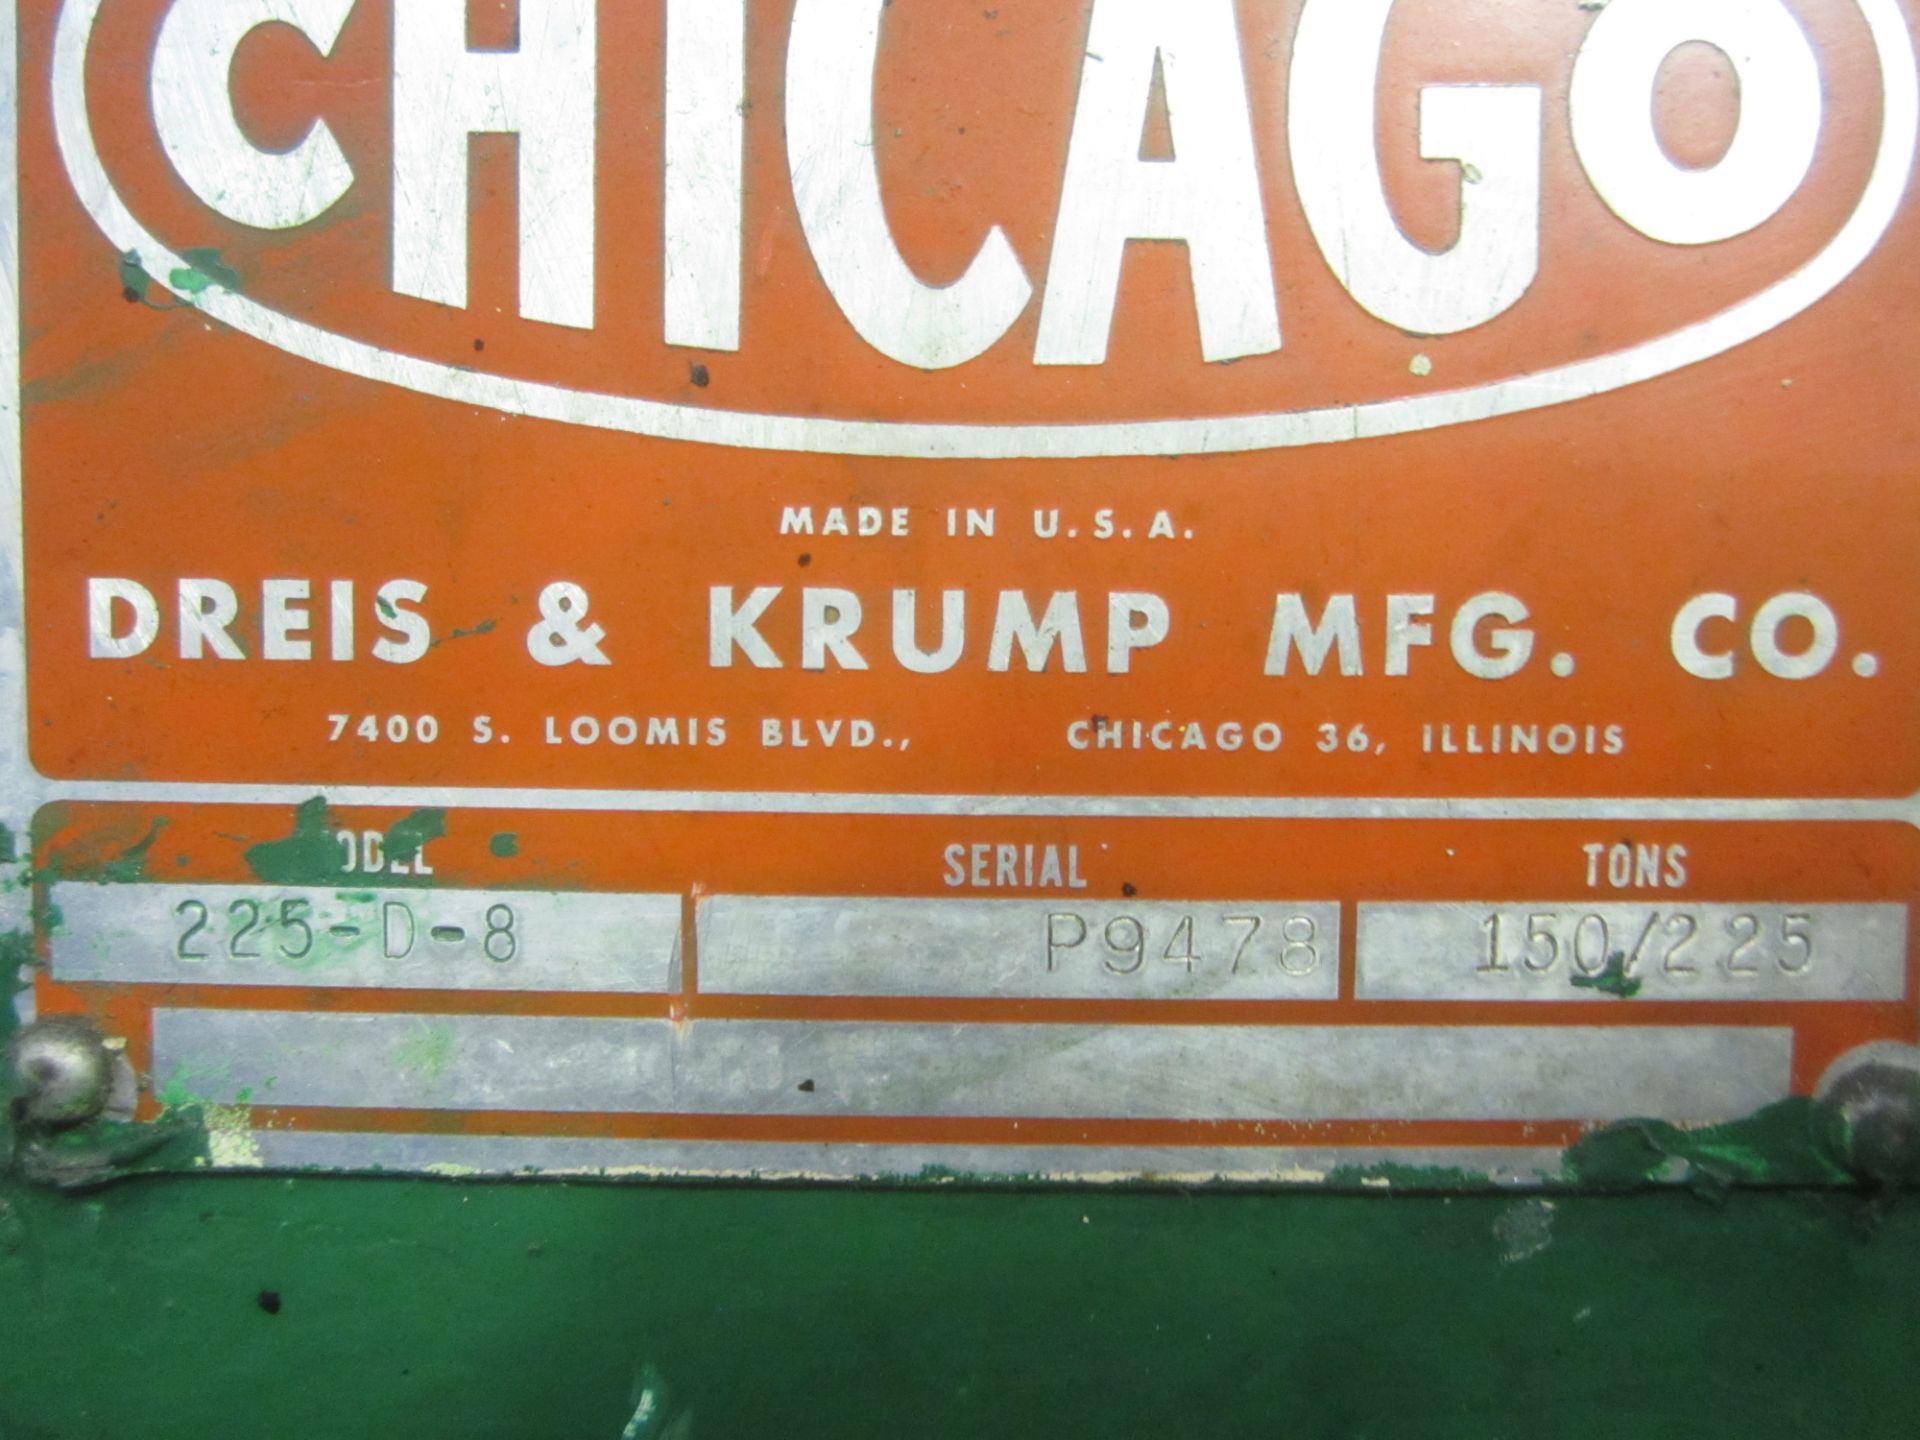 Chicago Dreis & Krump Model 225-D-8 Mechanical Press Brake, s/n P-9478, 225 Ton, 10’6” Overall, 8’6” - Image 8 of 8